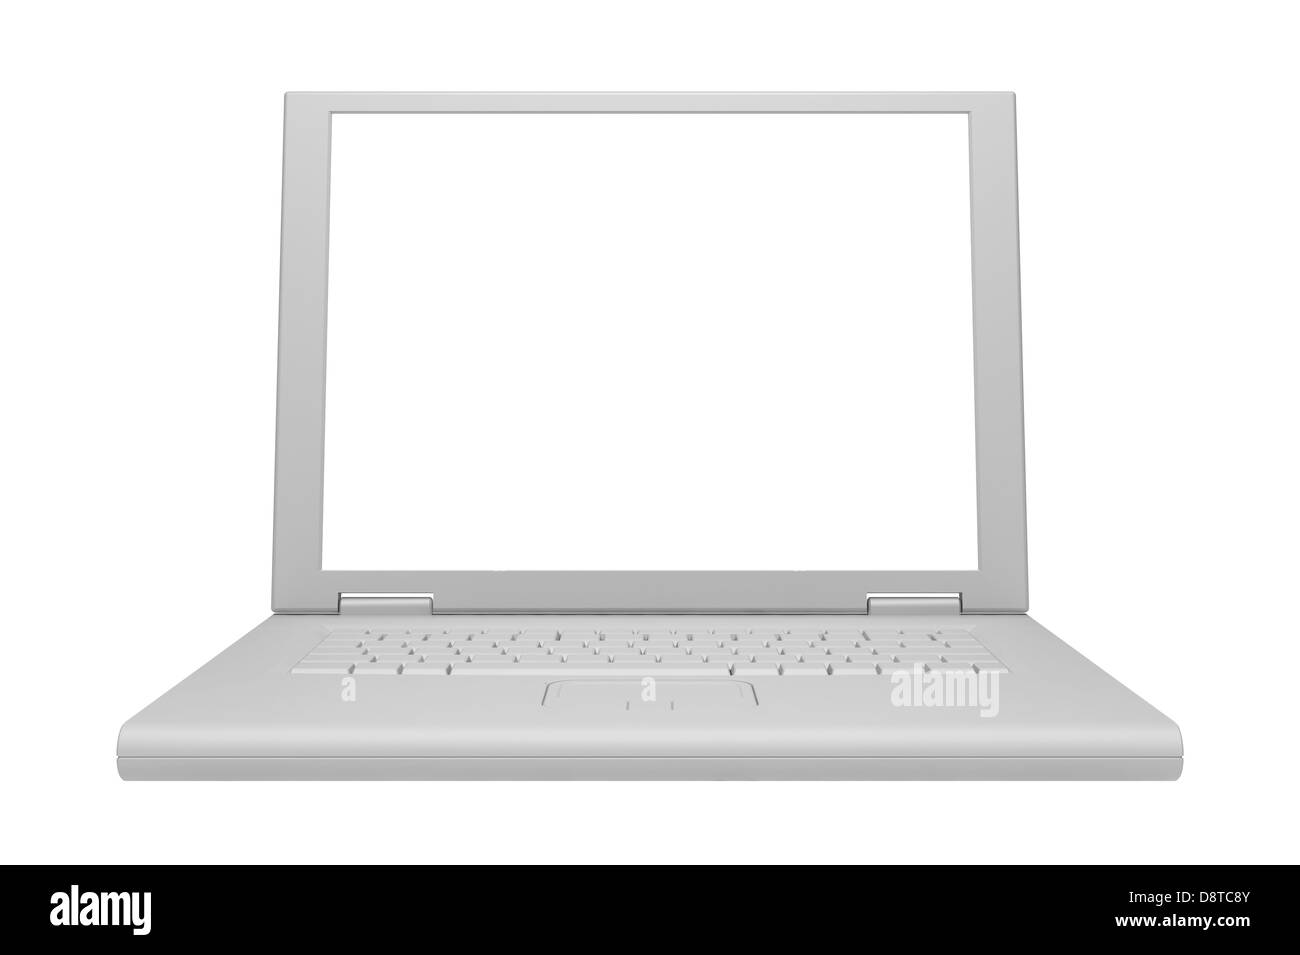 gray laptop isolated on white background Stock Photo